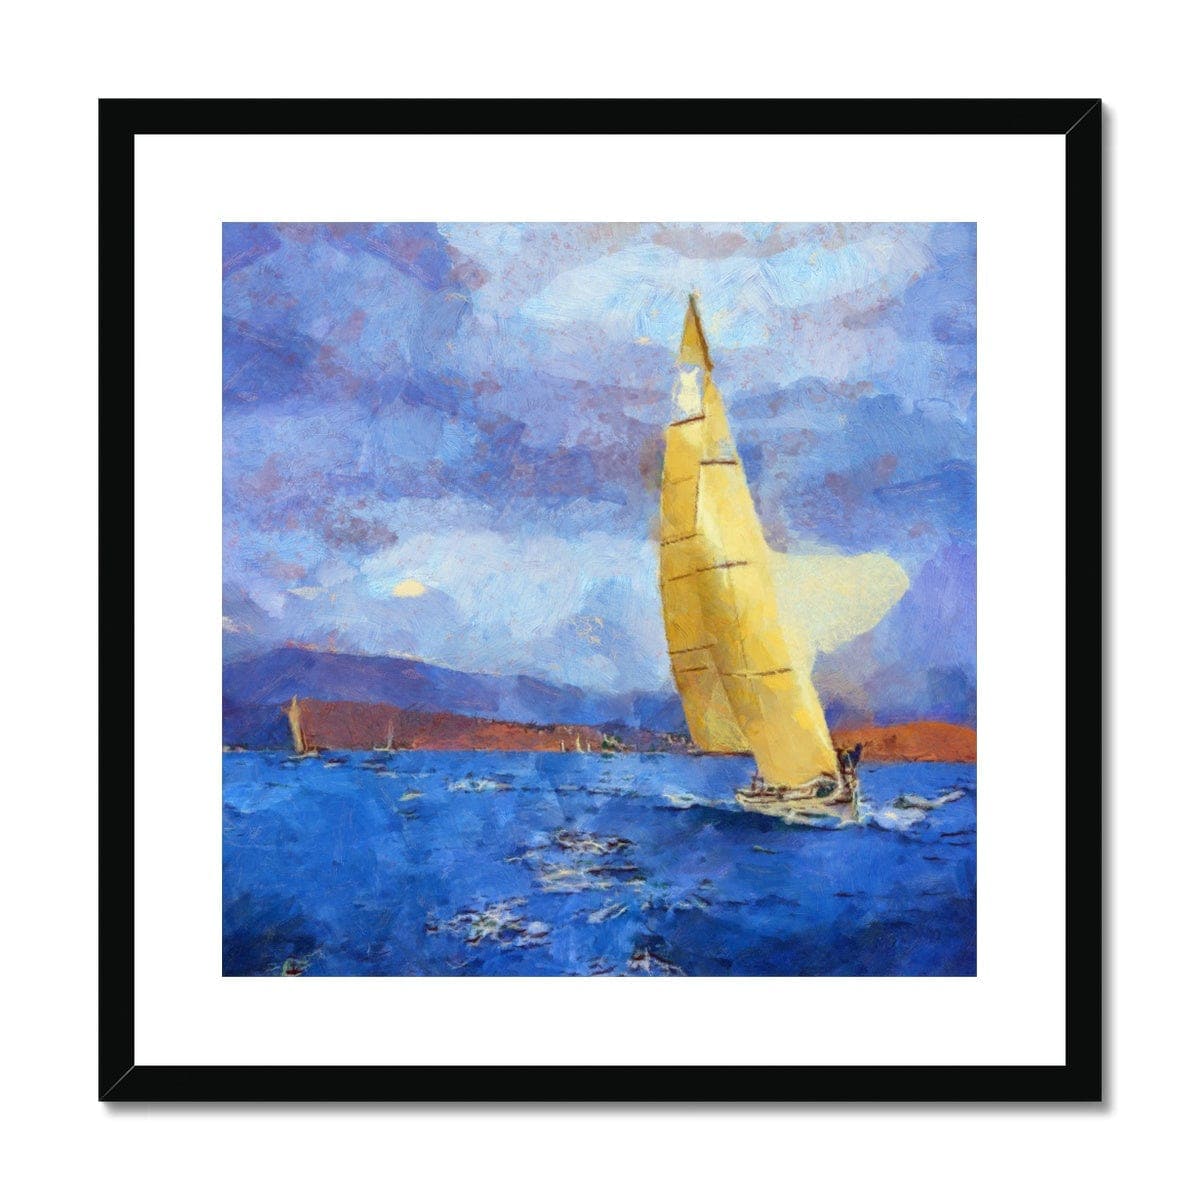 Sailing Framed & Mounted Print